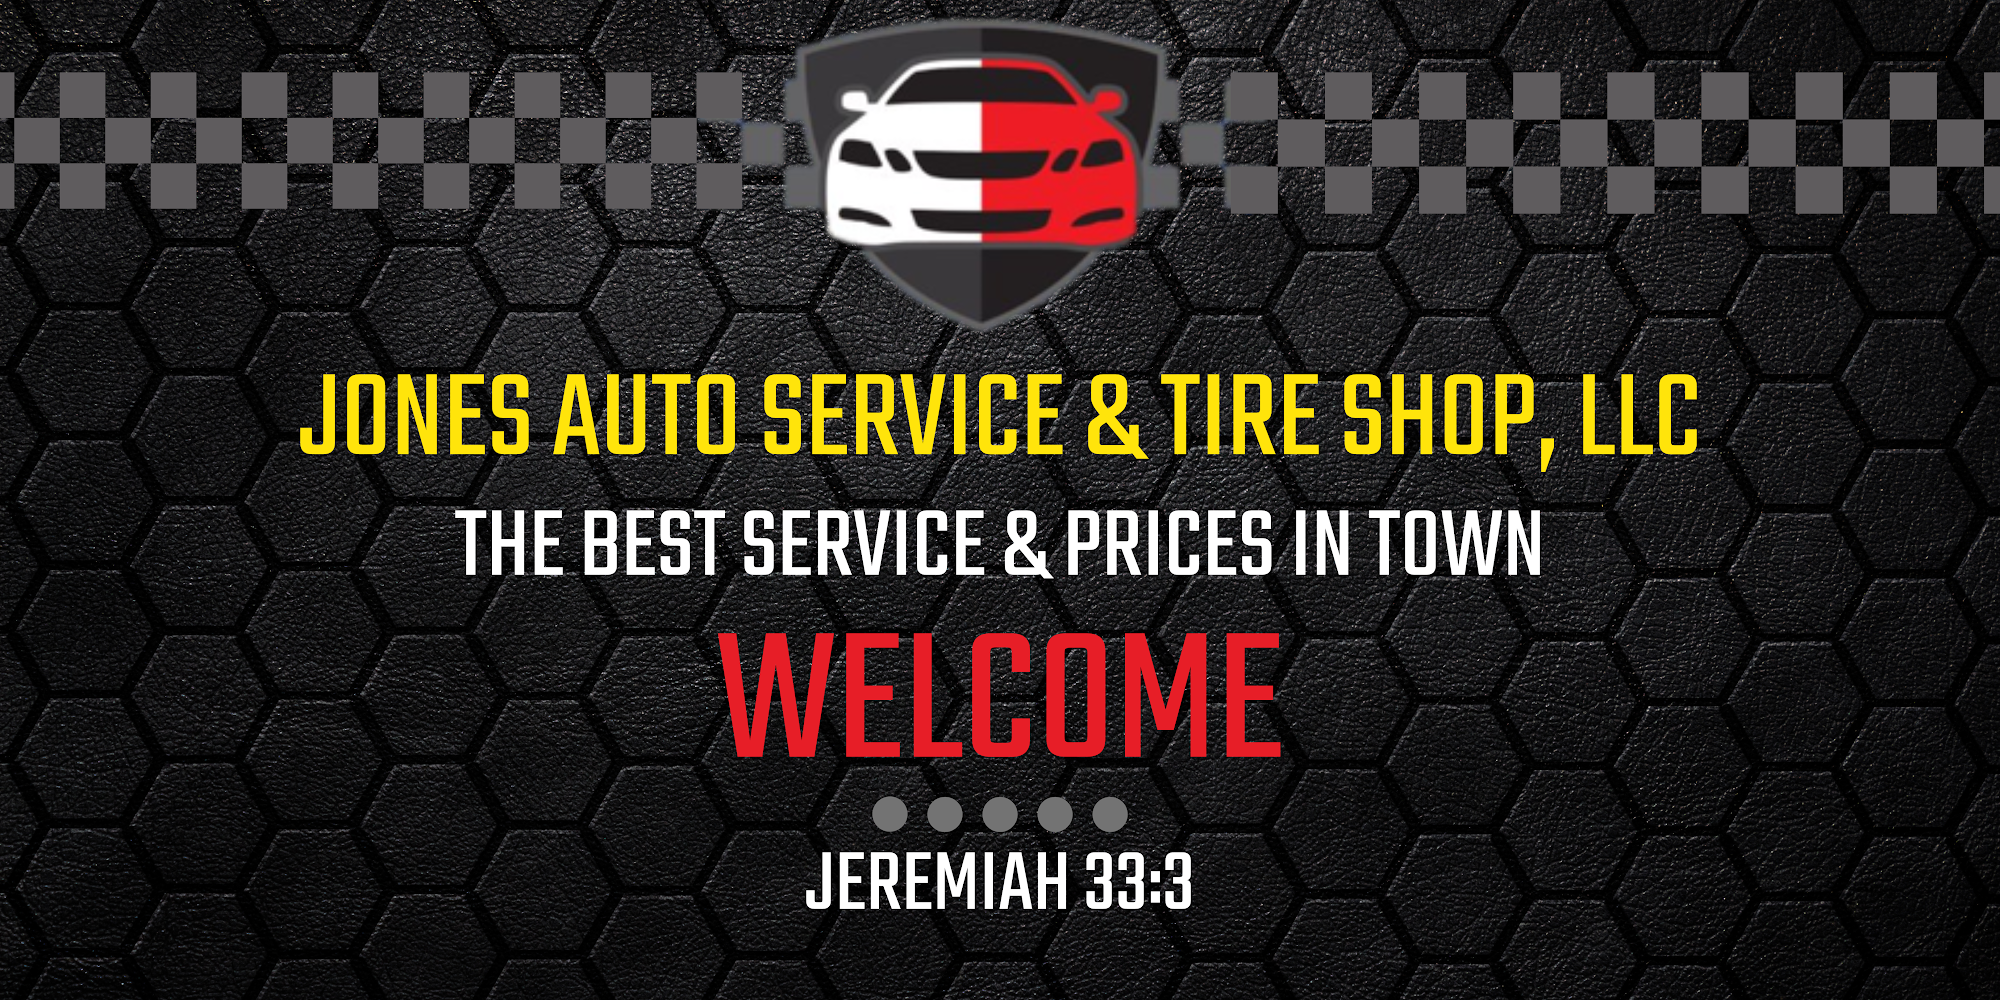 Jones Auto Service & Tire Shop, LLC